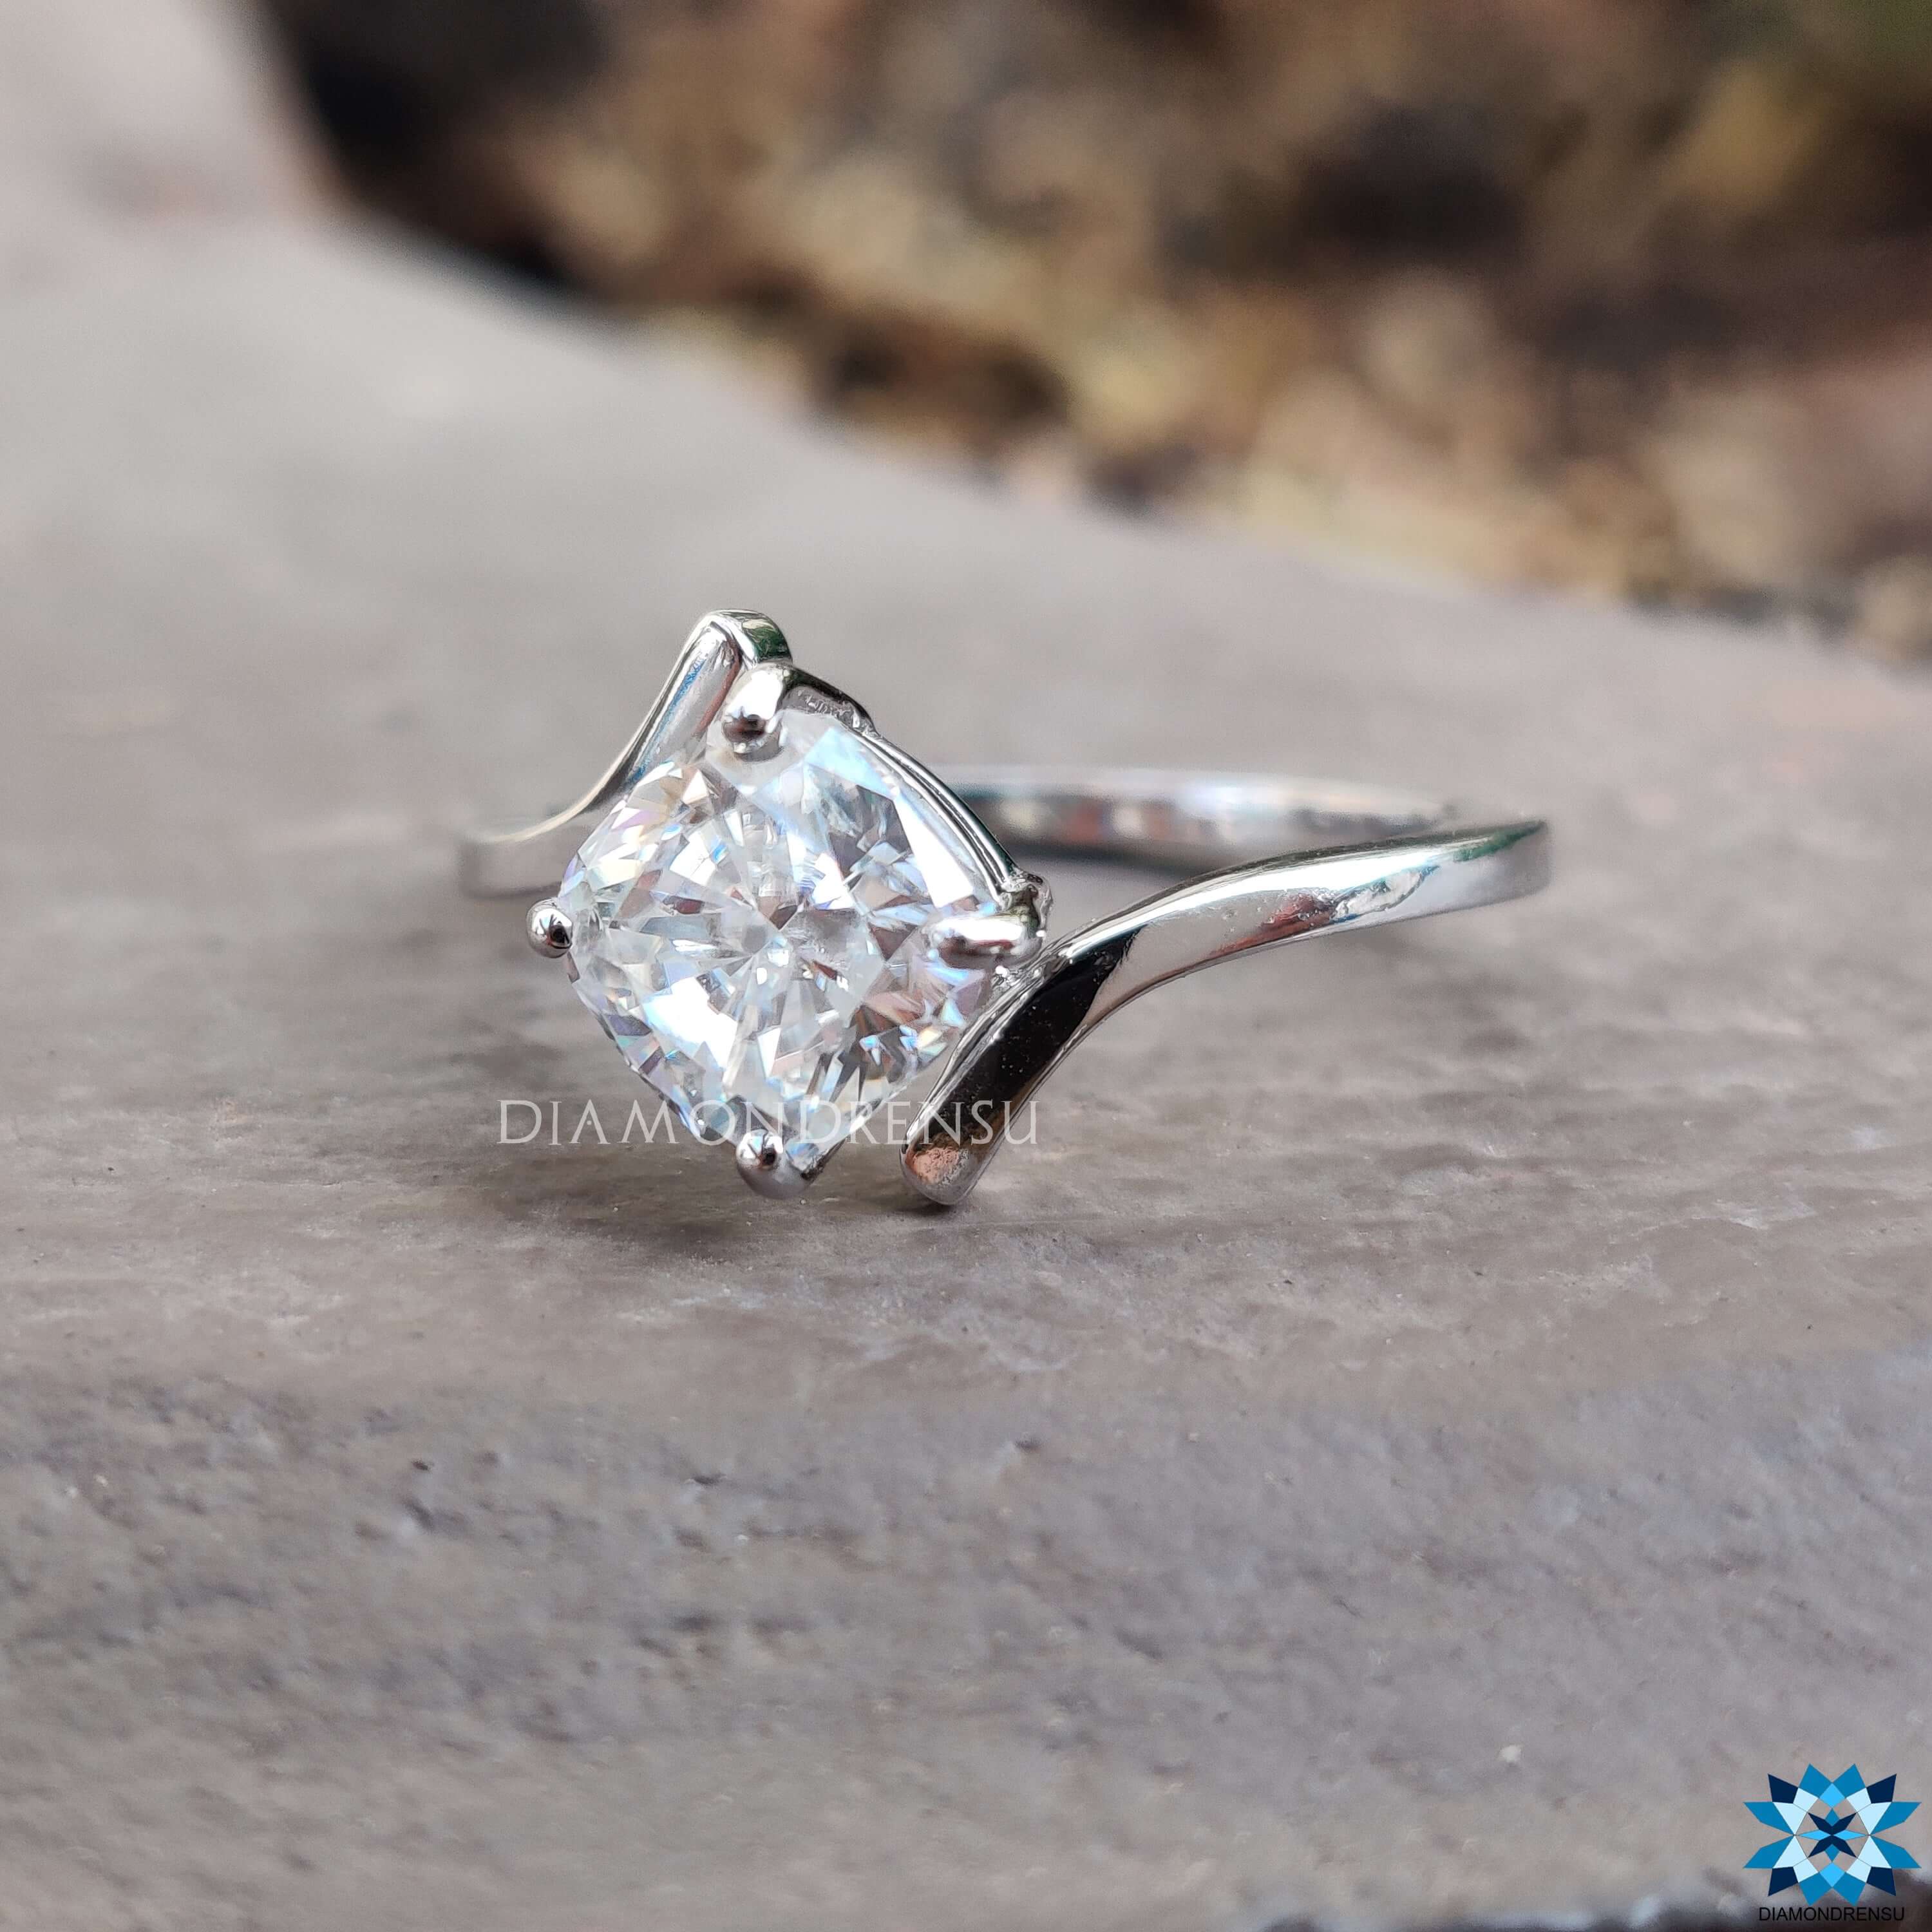 moissanite diamond engagement ring - diamondrensu